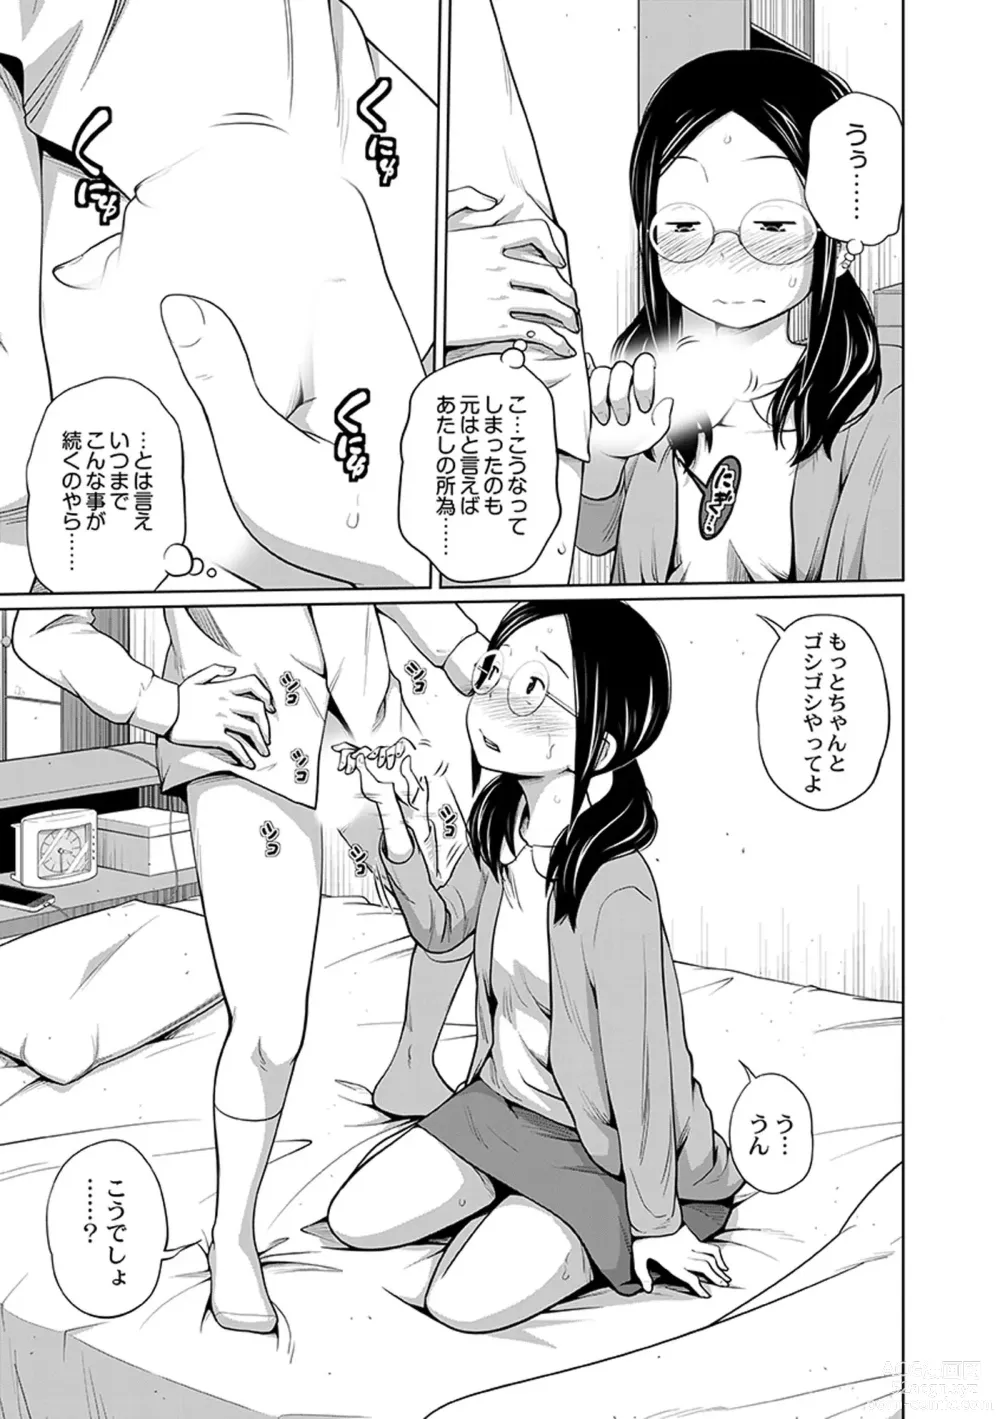 Page 7 of manga Ane Megane - spectacled sister